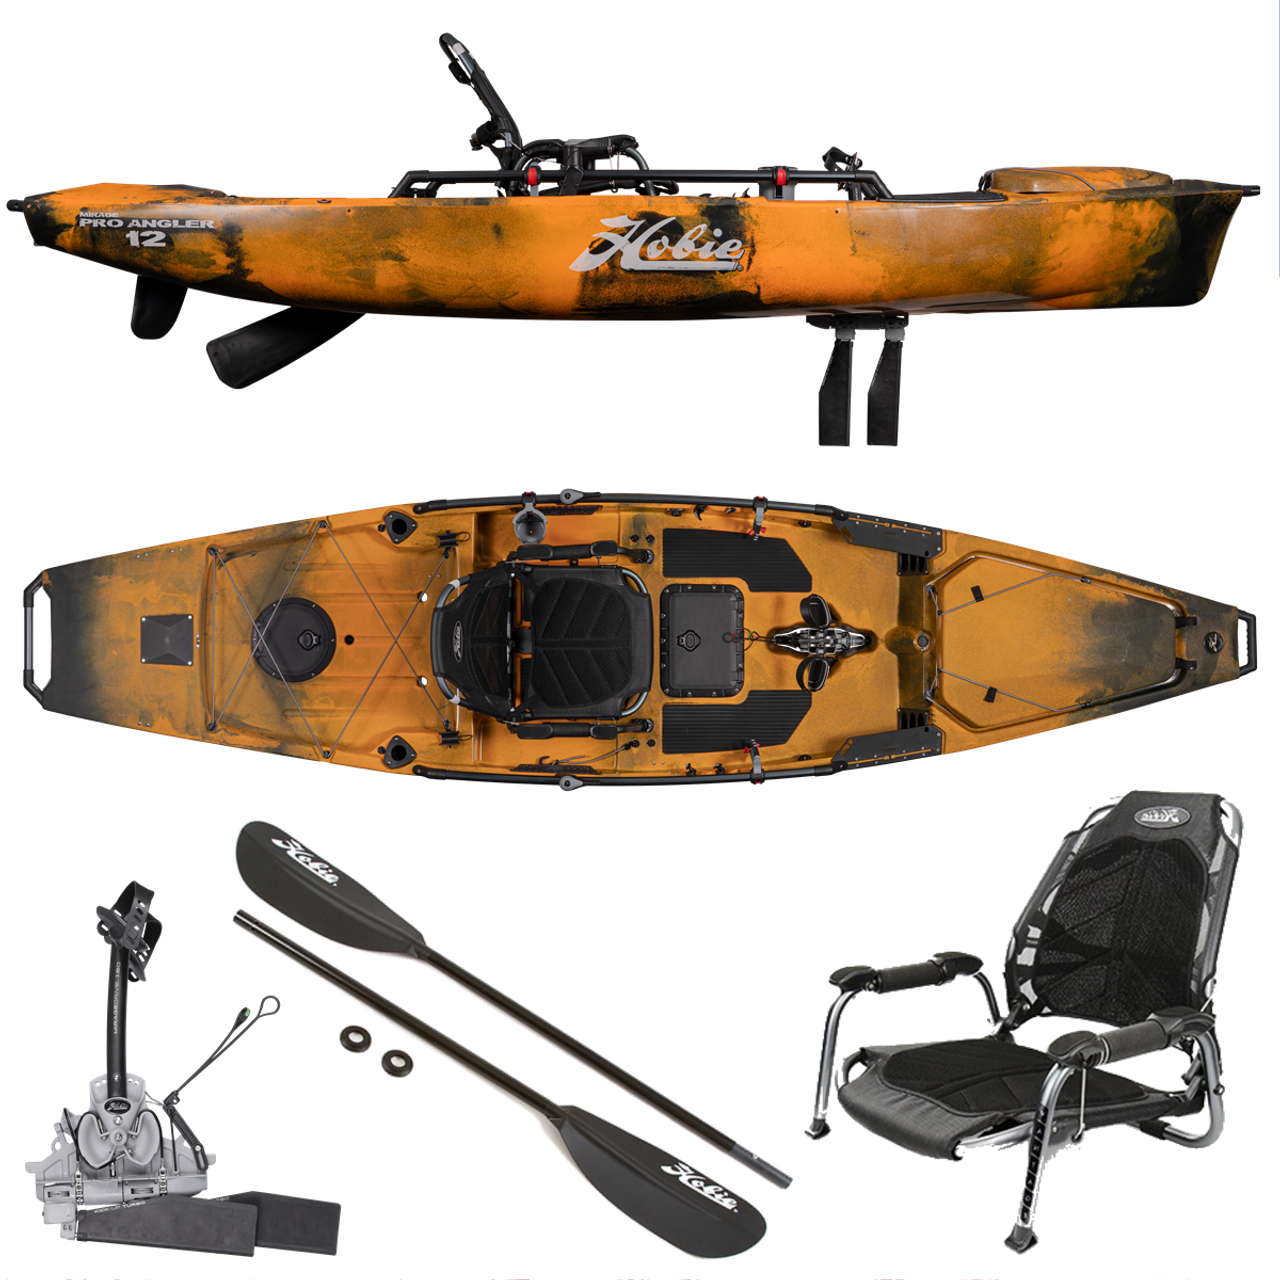 Hobie Mirage Pro Angler 12 Fishing Kayak With Kick Up Turbo, 50% OFF